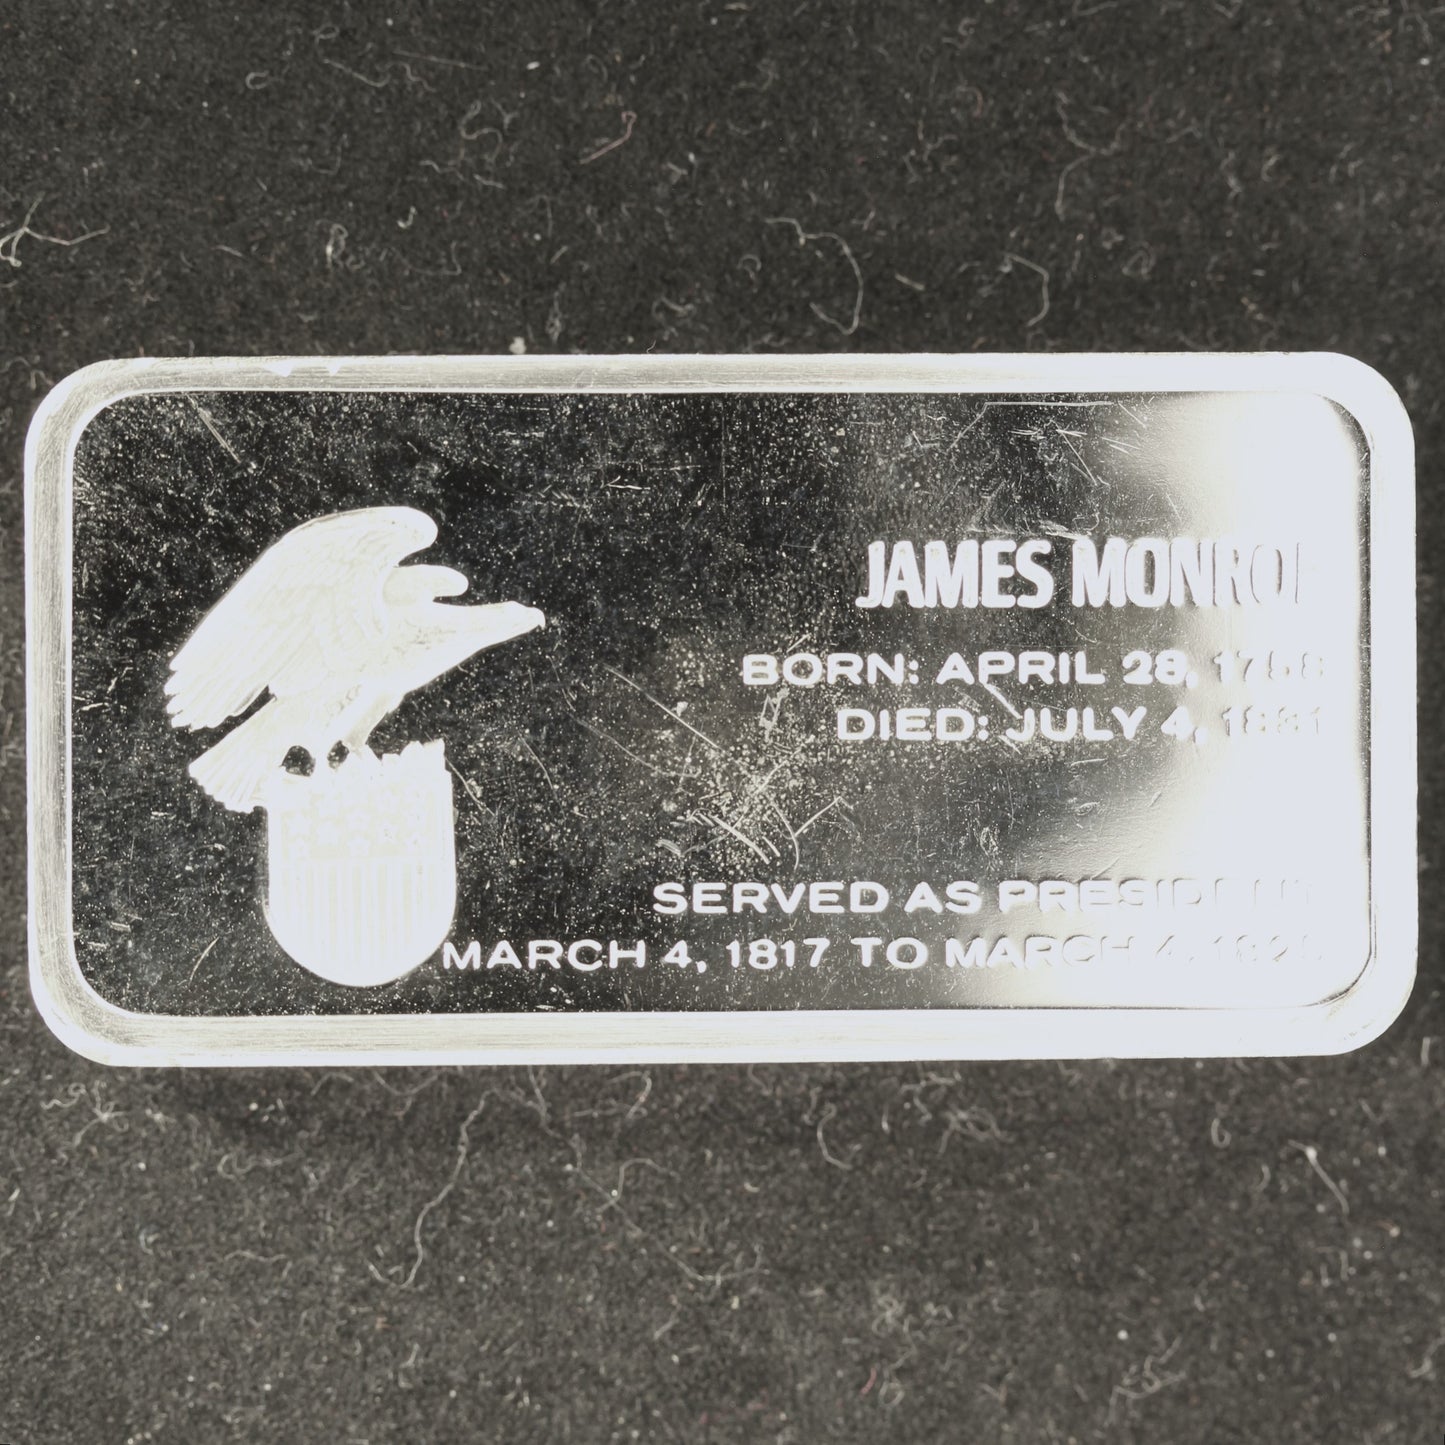 Franklin Mint Presidents James Monroe 1000 Grain Sterling Silver Ingot